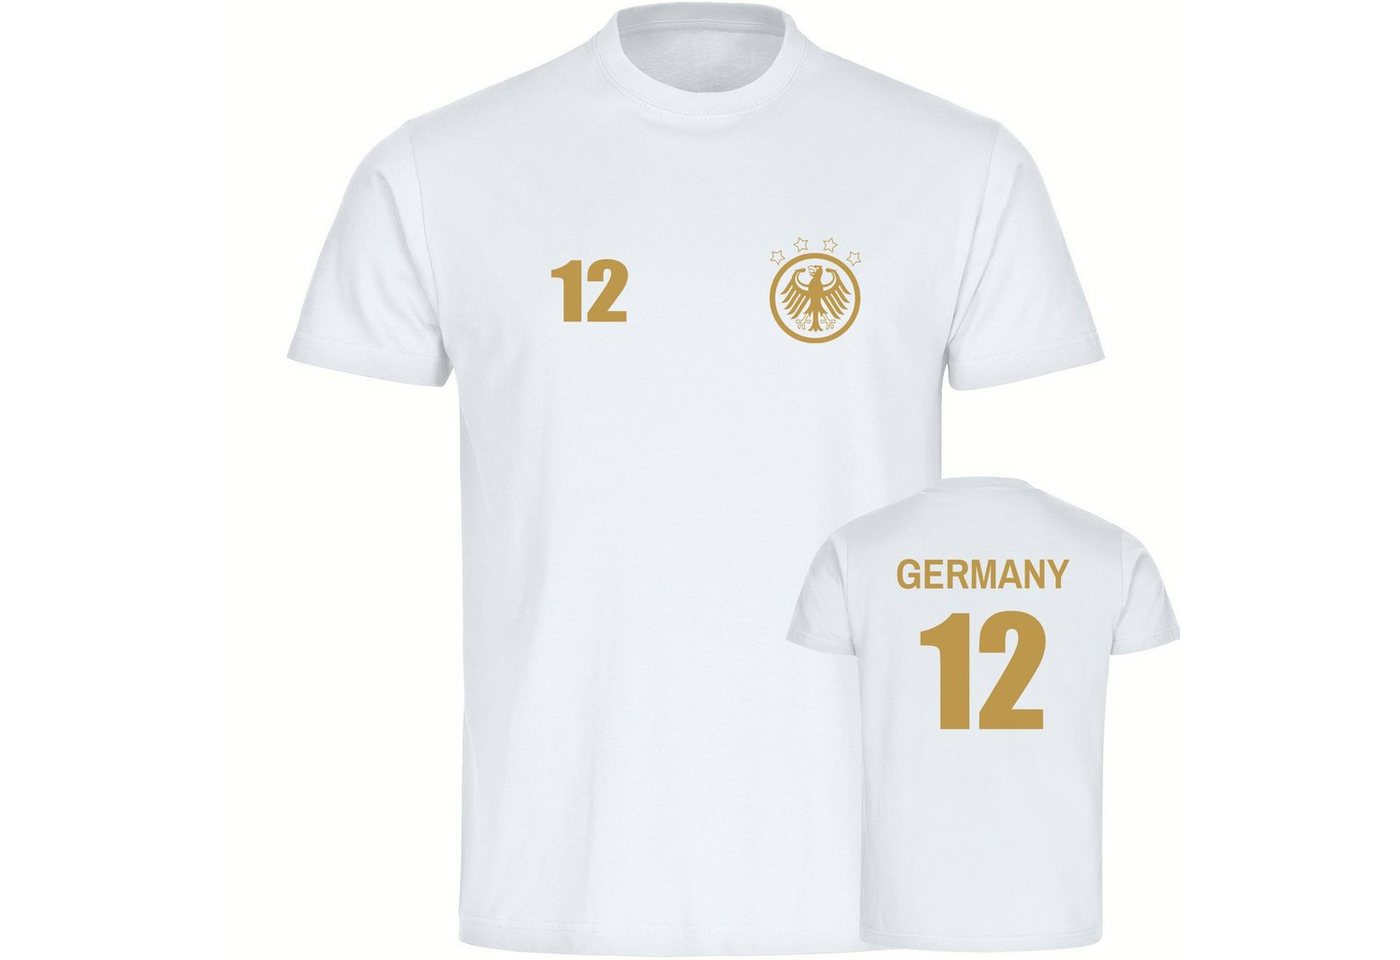 multifanshop T-Shirt Kinder Germany - Adler Retro Trikot 12 - Boy Girl von multifanshop